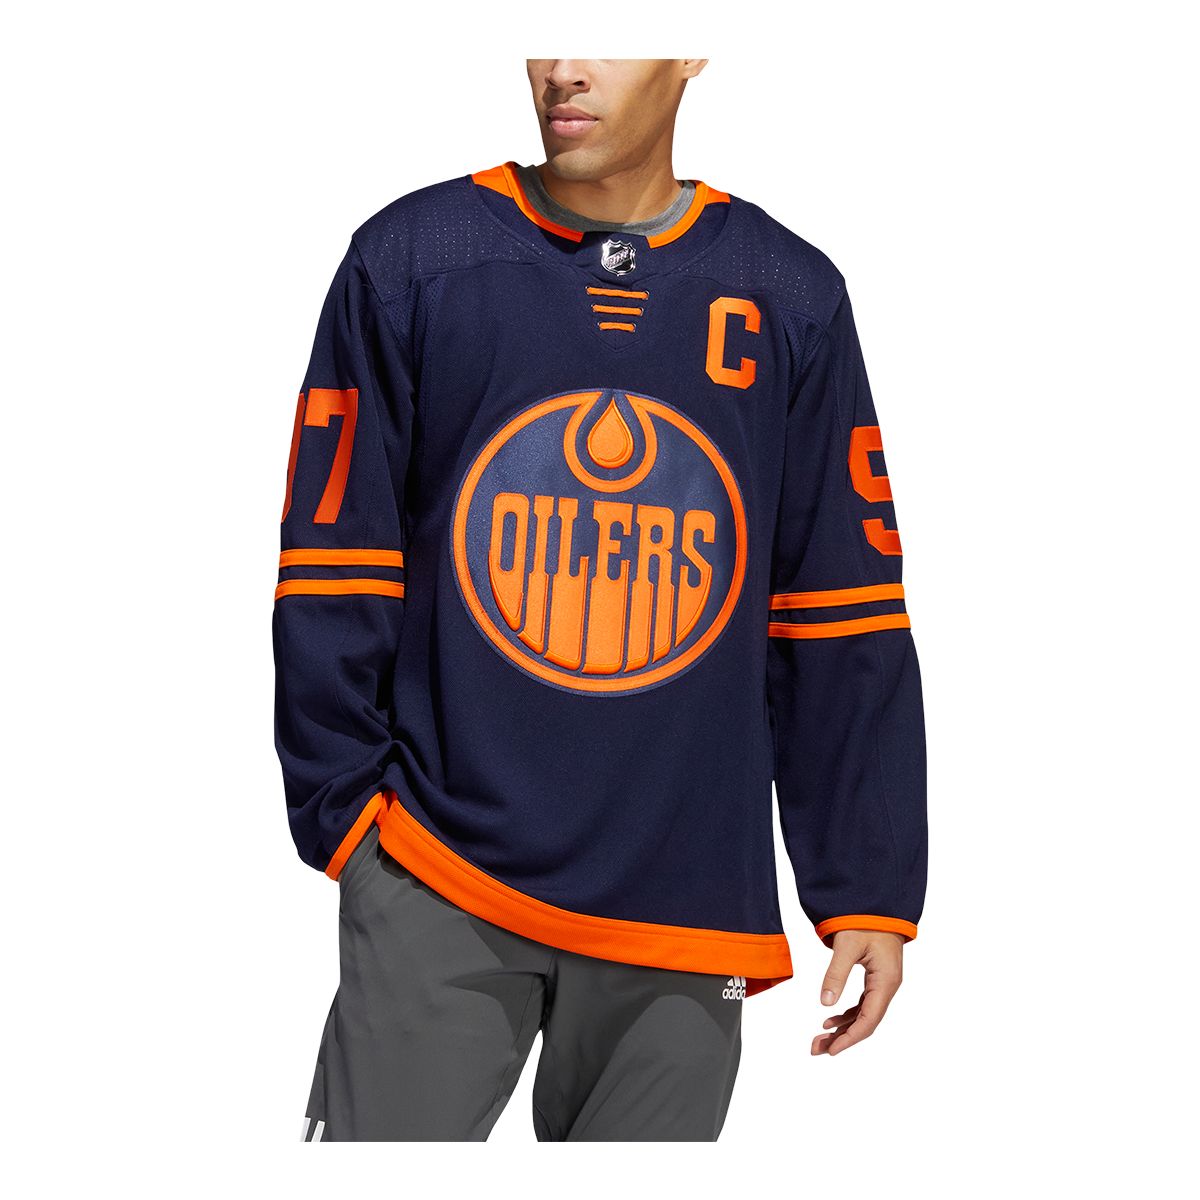 ADIDAS Edmonton Oilers adidas Connor McDavid Prime Authentic Jersey Hockey  NHL